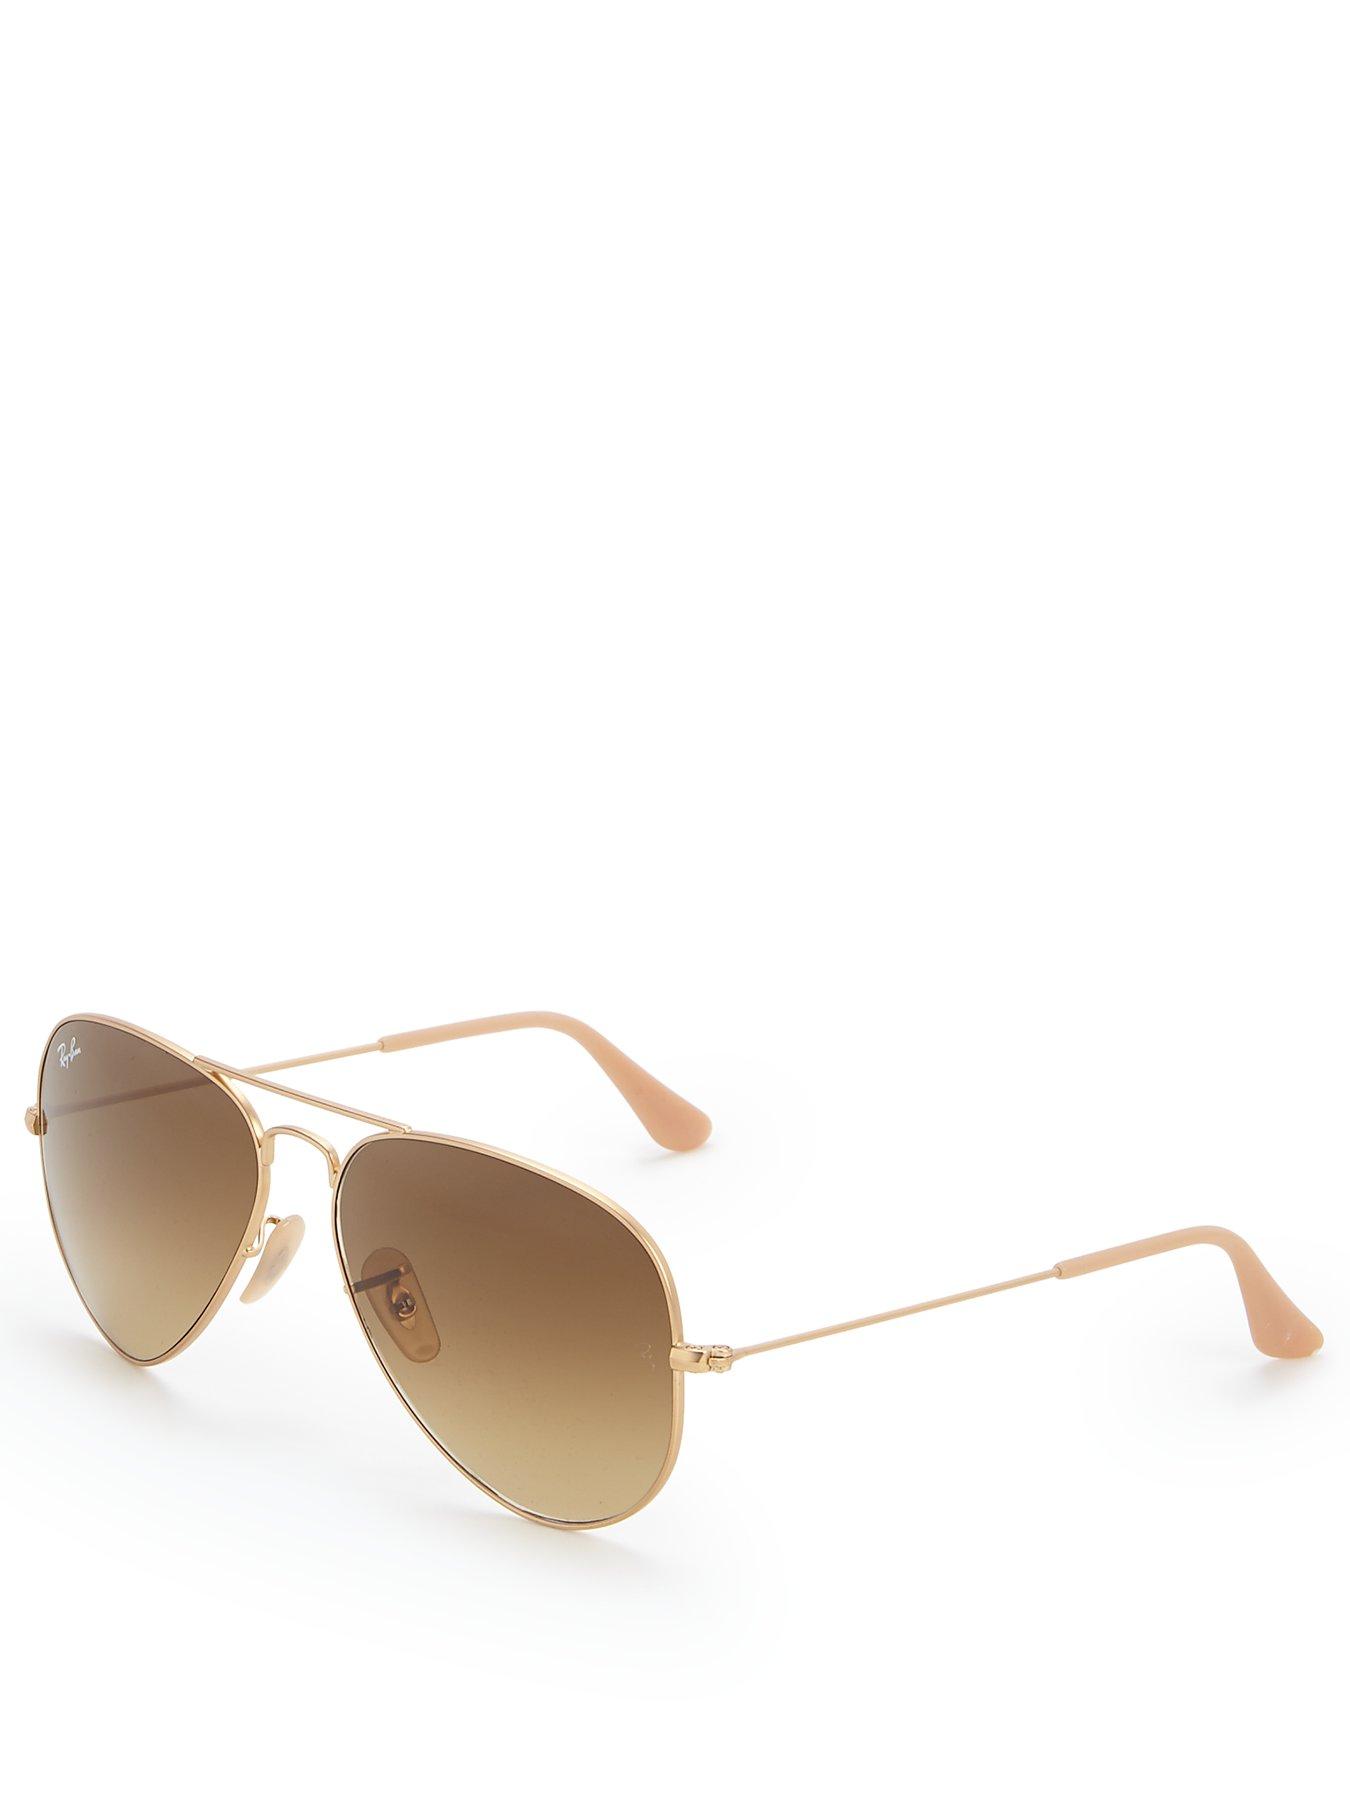 Ray-Ban Gradient Lens Aviator Sunglasses - Rose Gold 